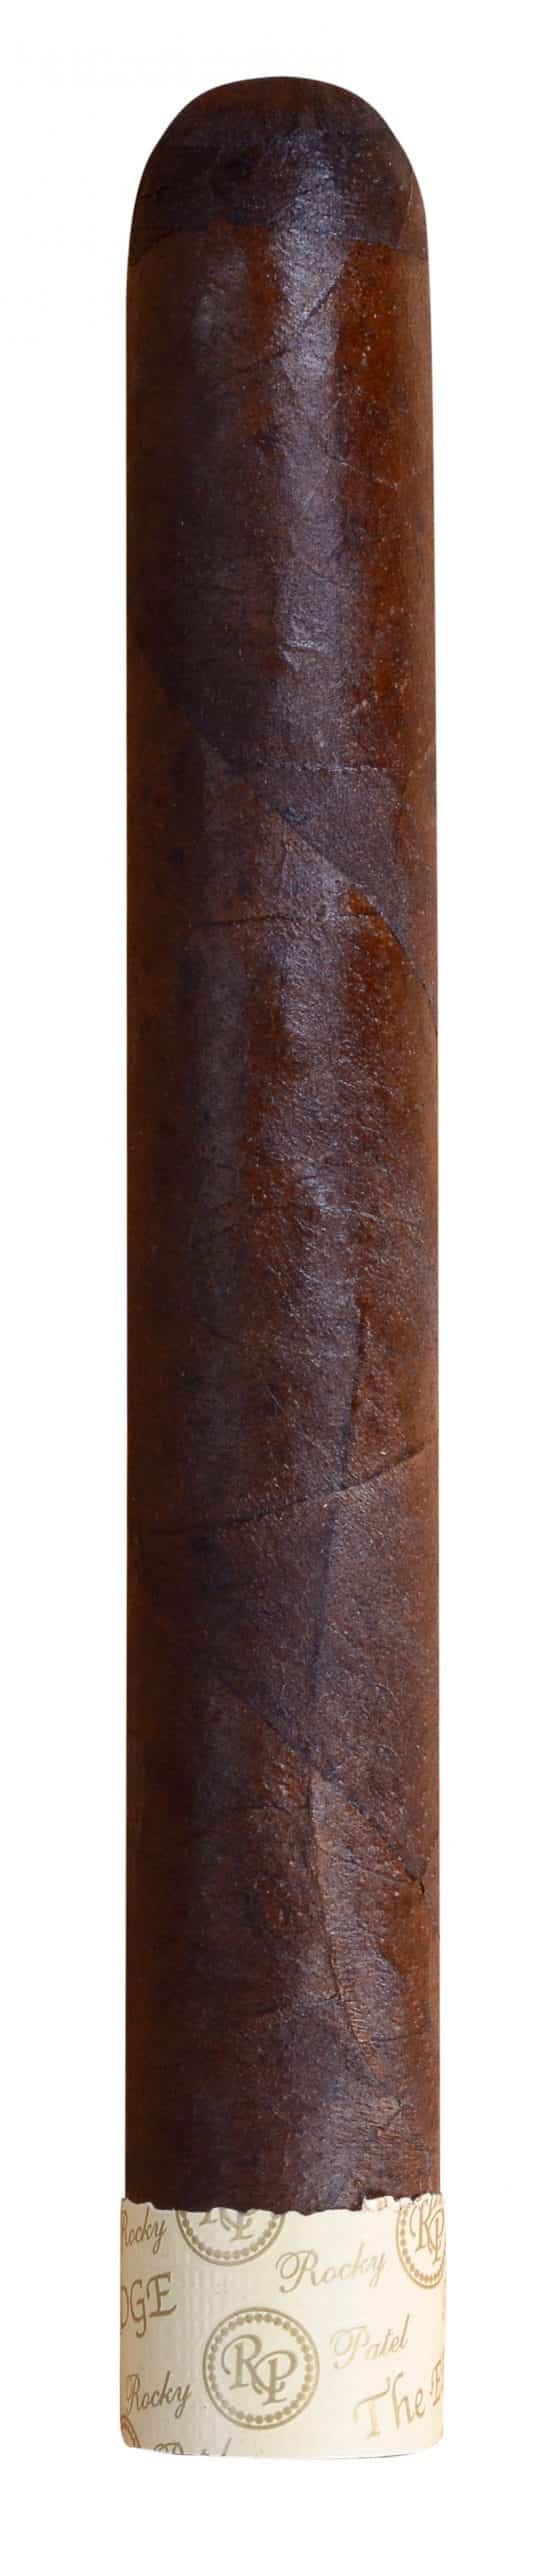 rocky patel edge maduro single cigar